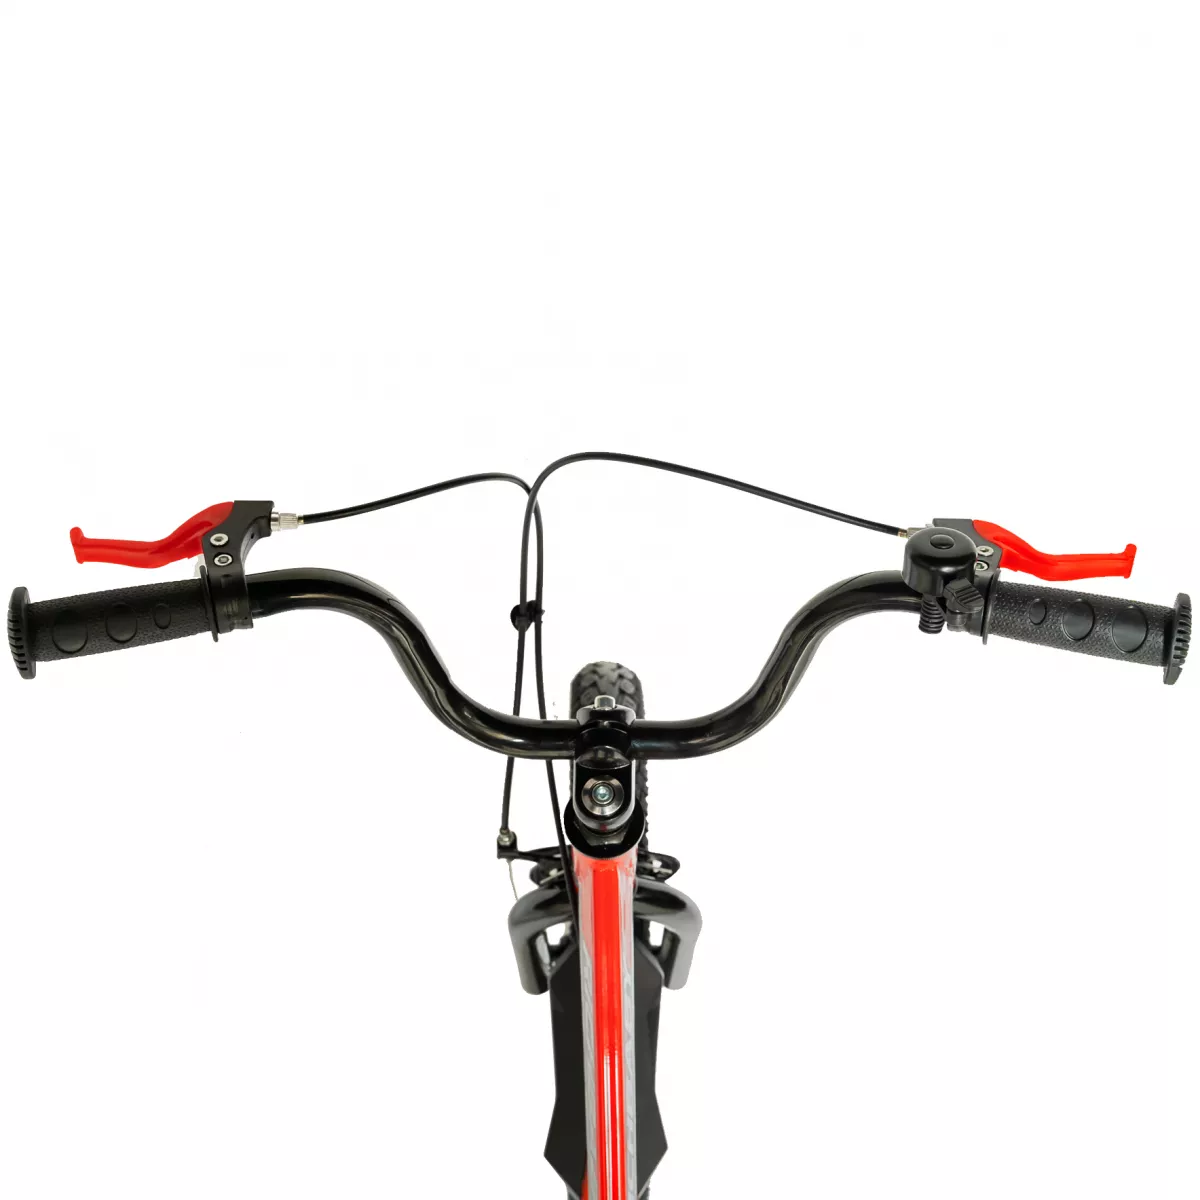 Bicicleta copii 18" RICH BABY R1803L, roti ajutatoare, culoare rosu/negru, varsta 5-7 ani + COS DEPOZITARE CADOU - RESIGILATA